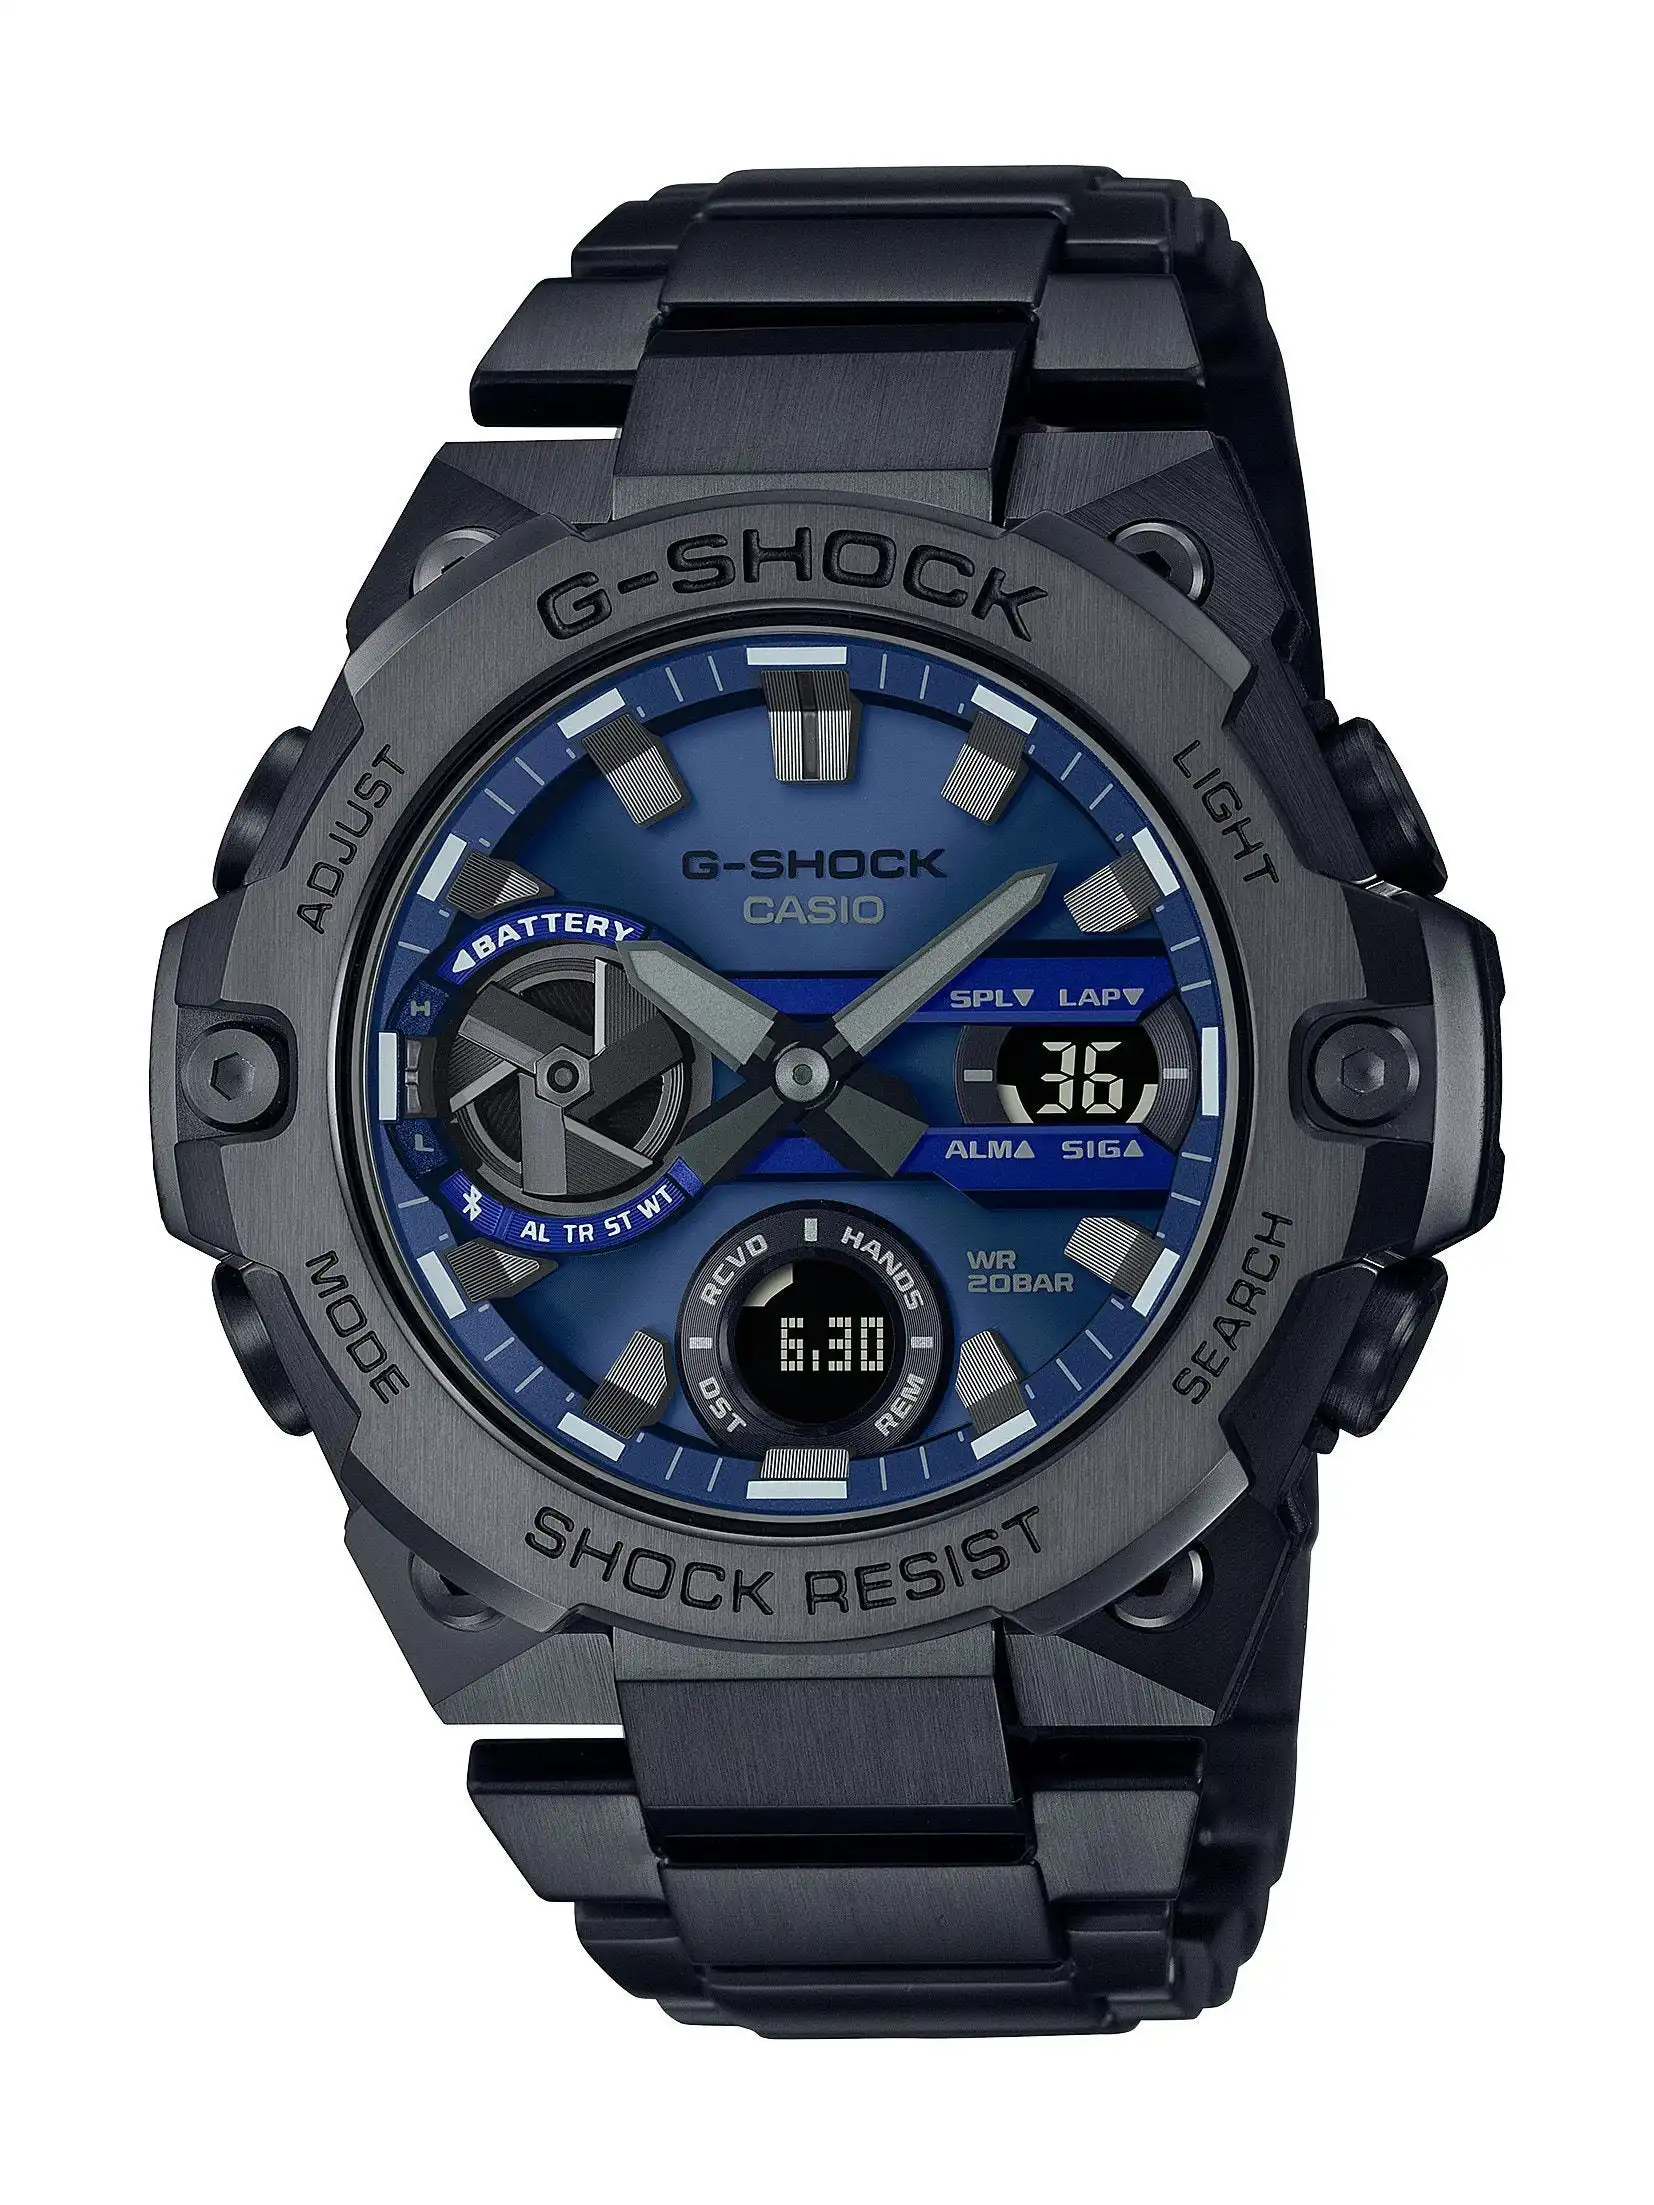 Casio G Shock G Steel Black and Blue Watch GST-B400BD-1A2DR